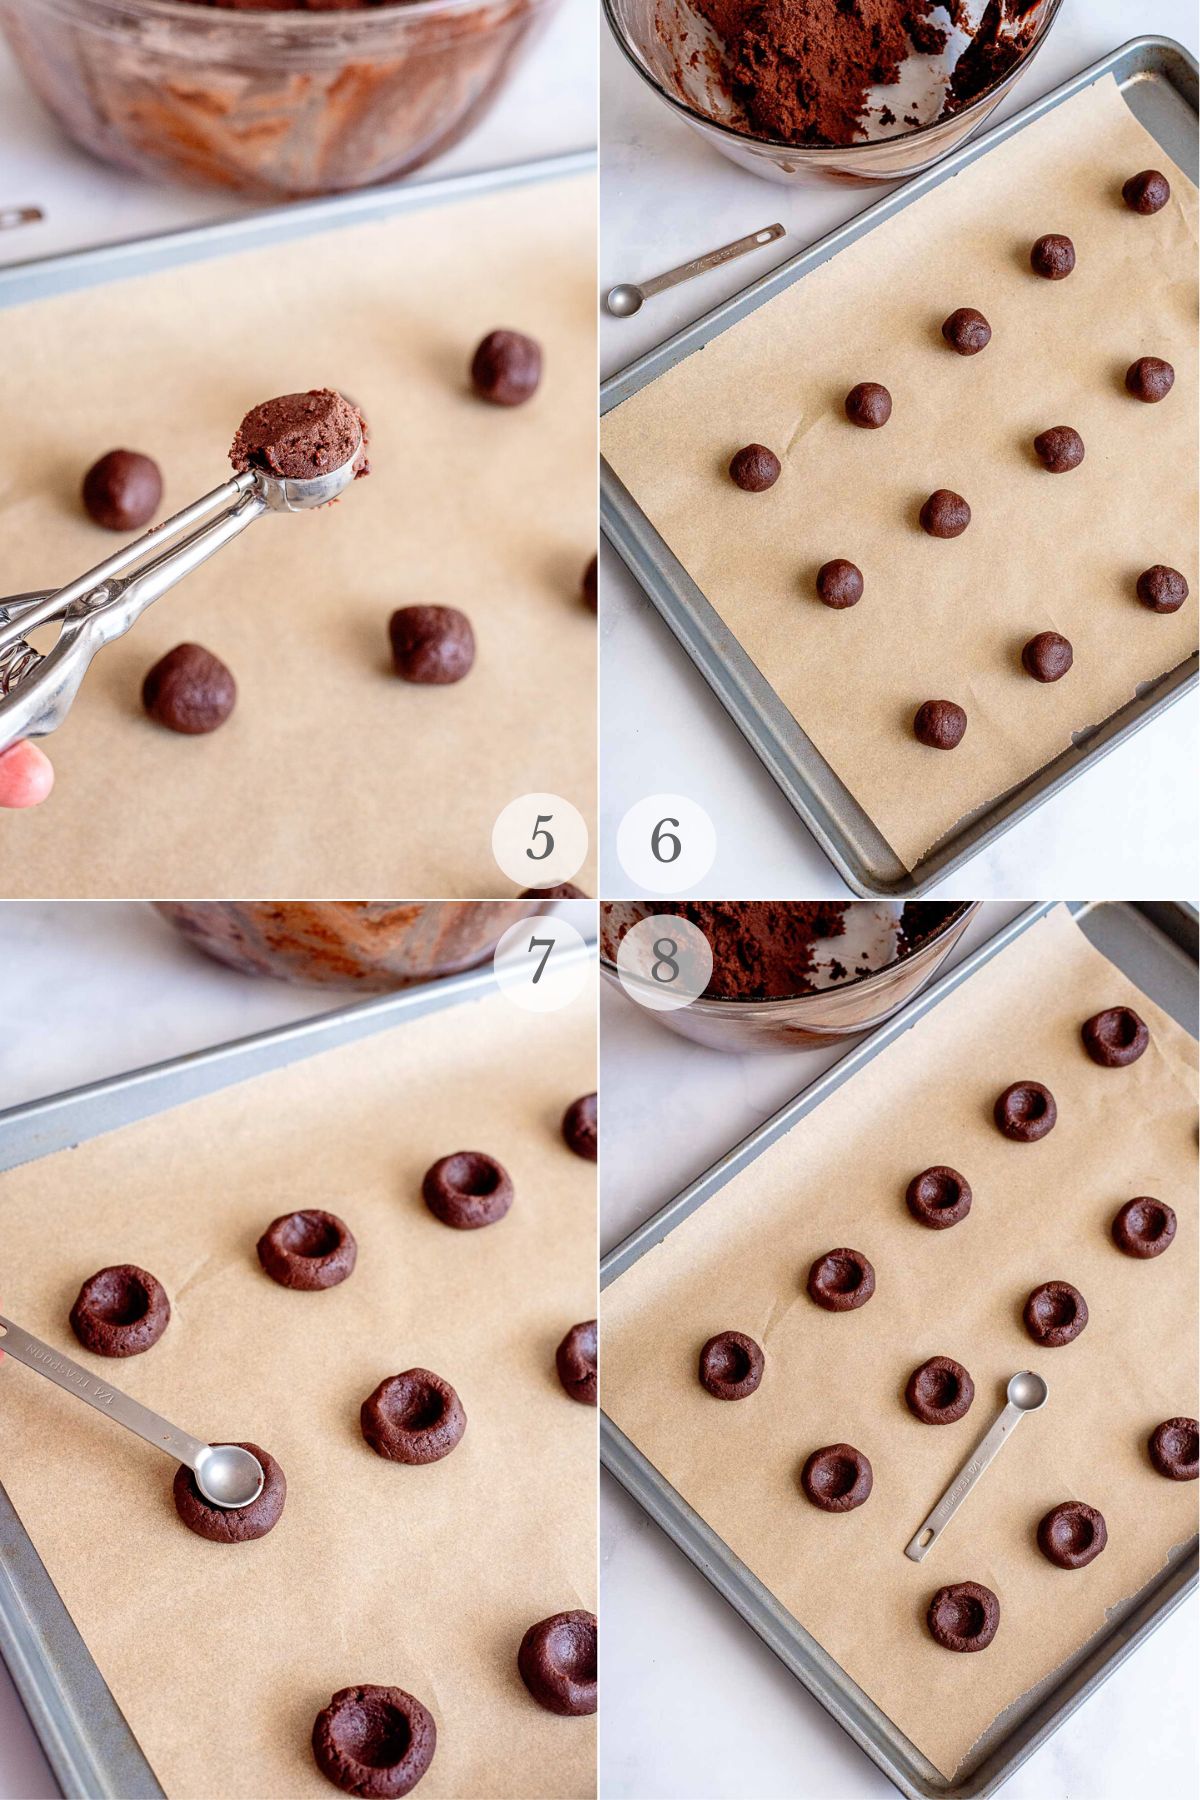 chocolate thumbprint cookies recipe steps 5-8.